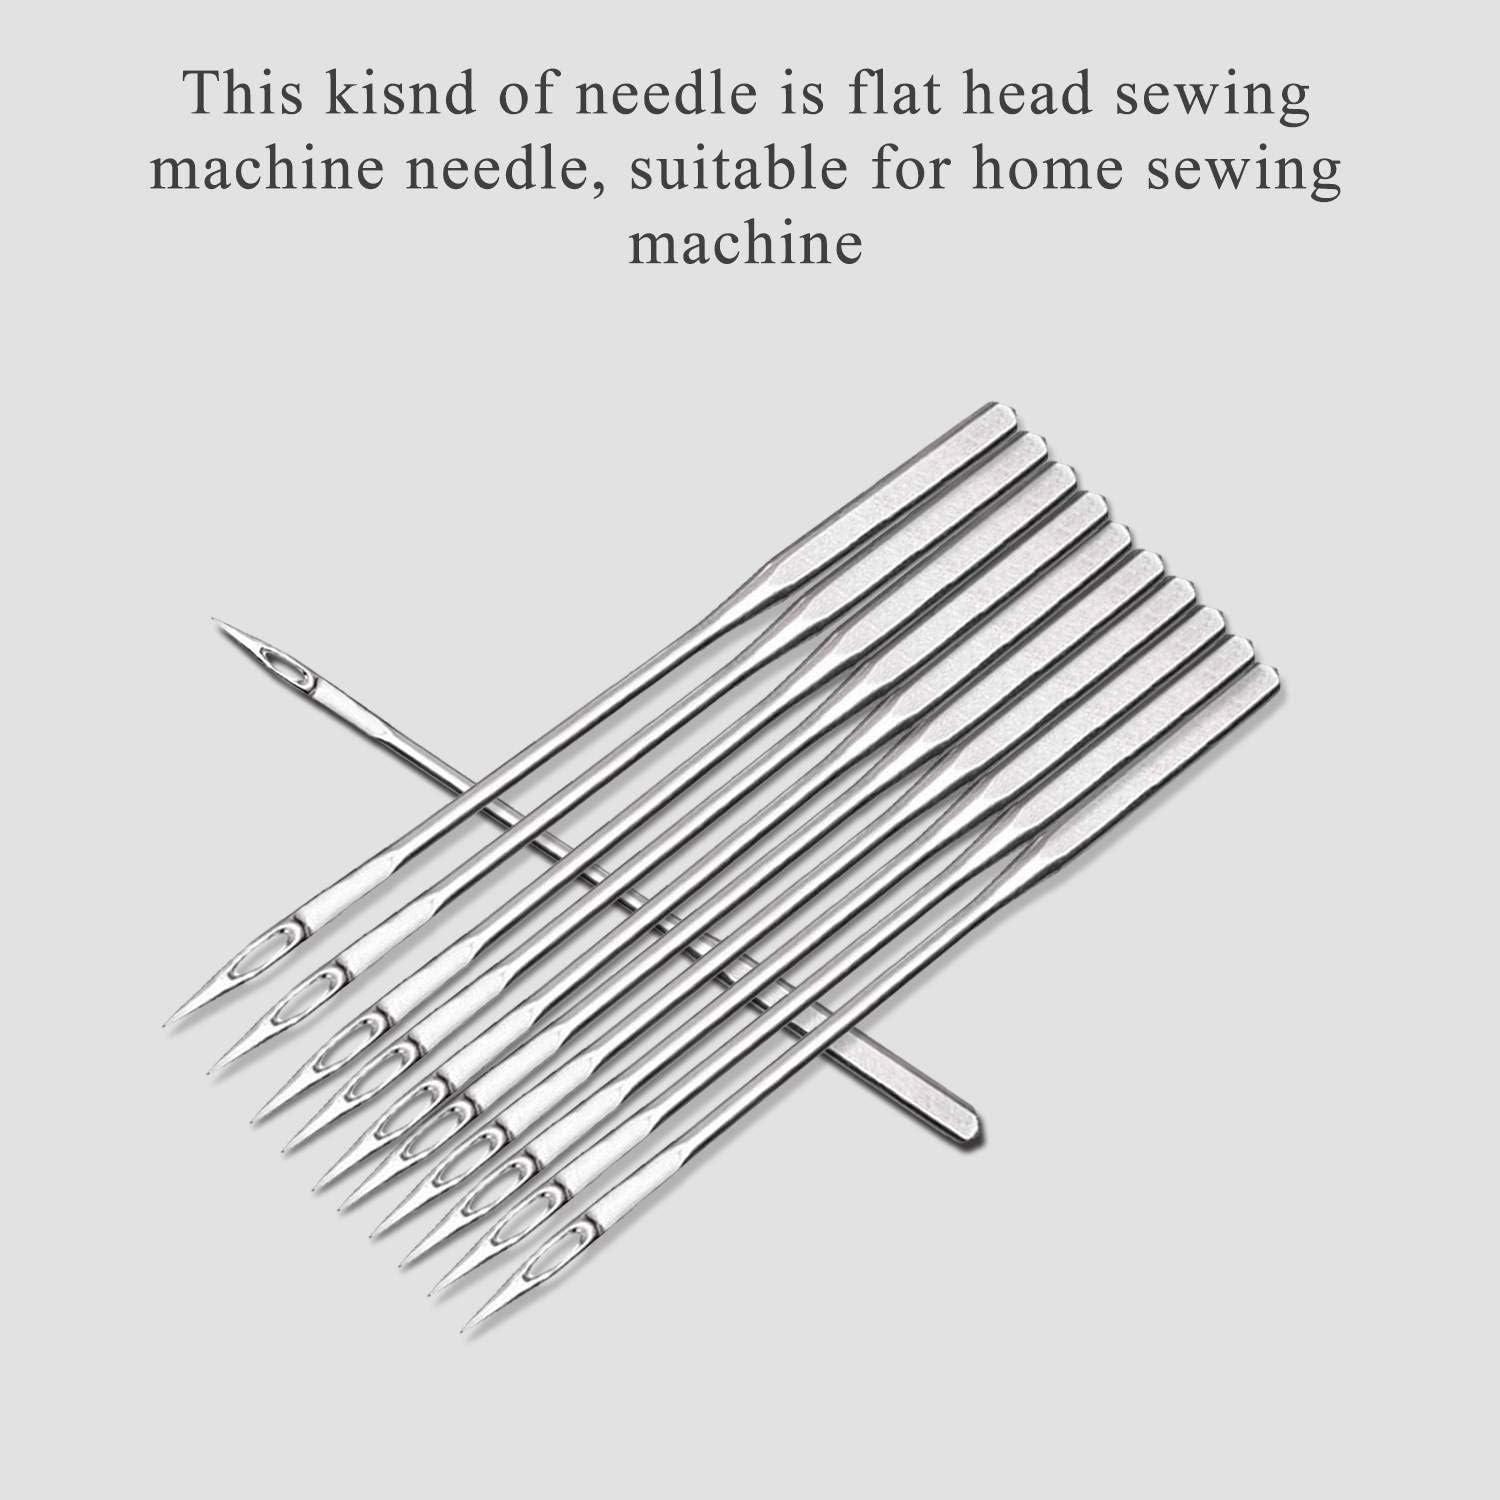 Singer Embroidery Machine Needles 5/Pkg-Size 90